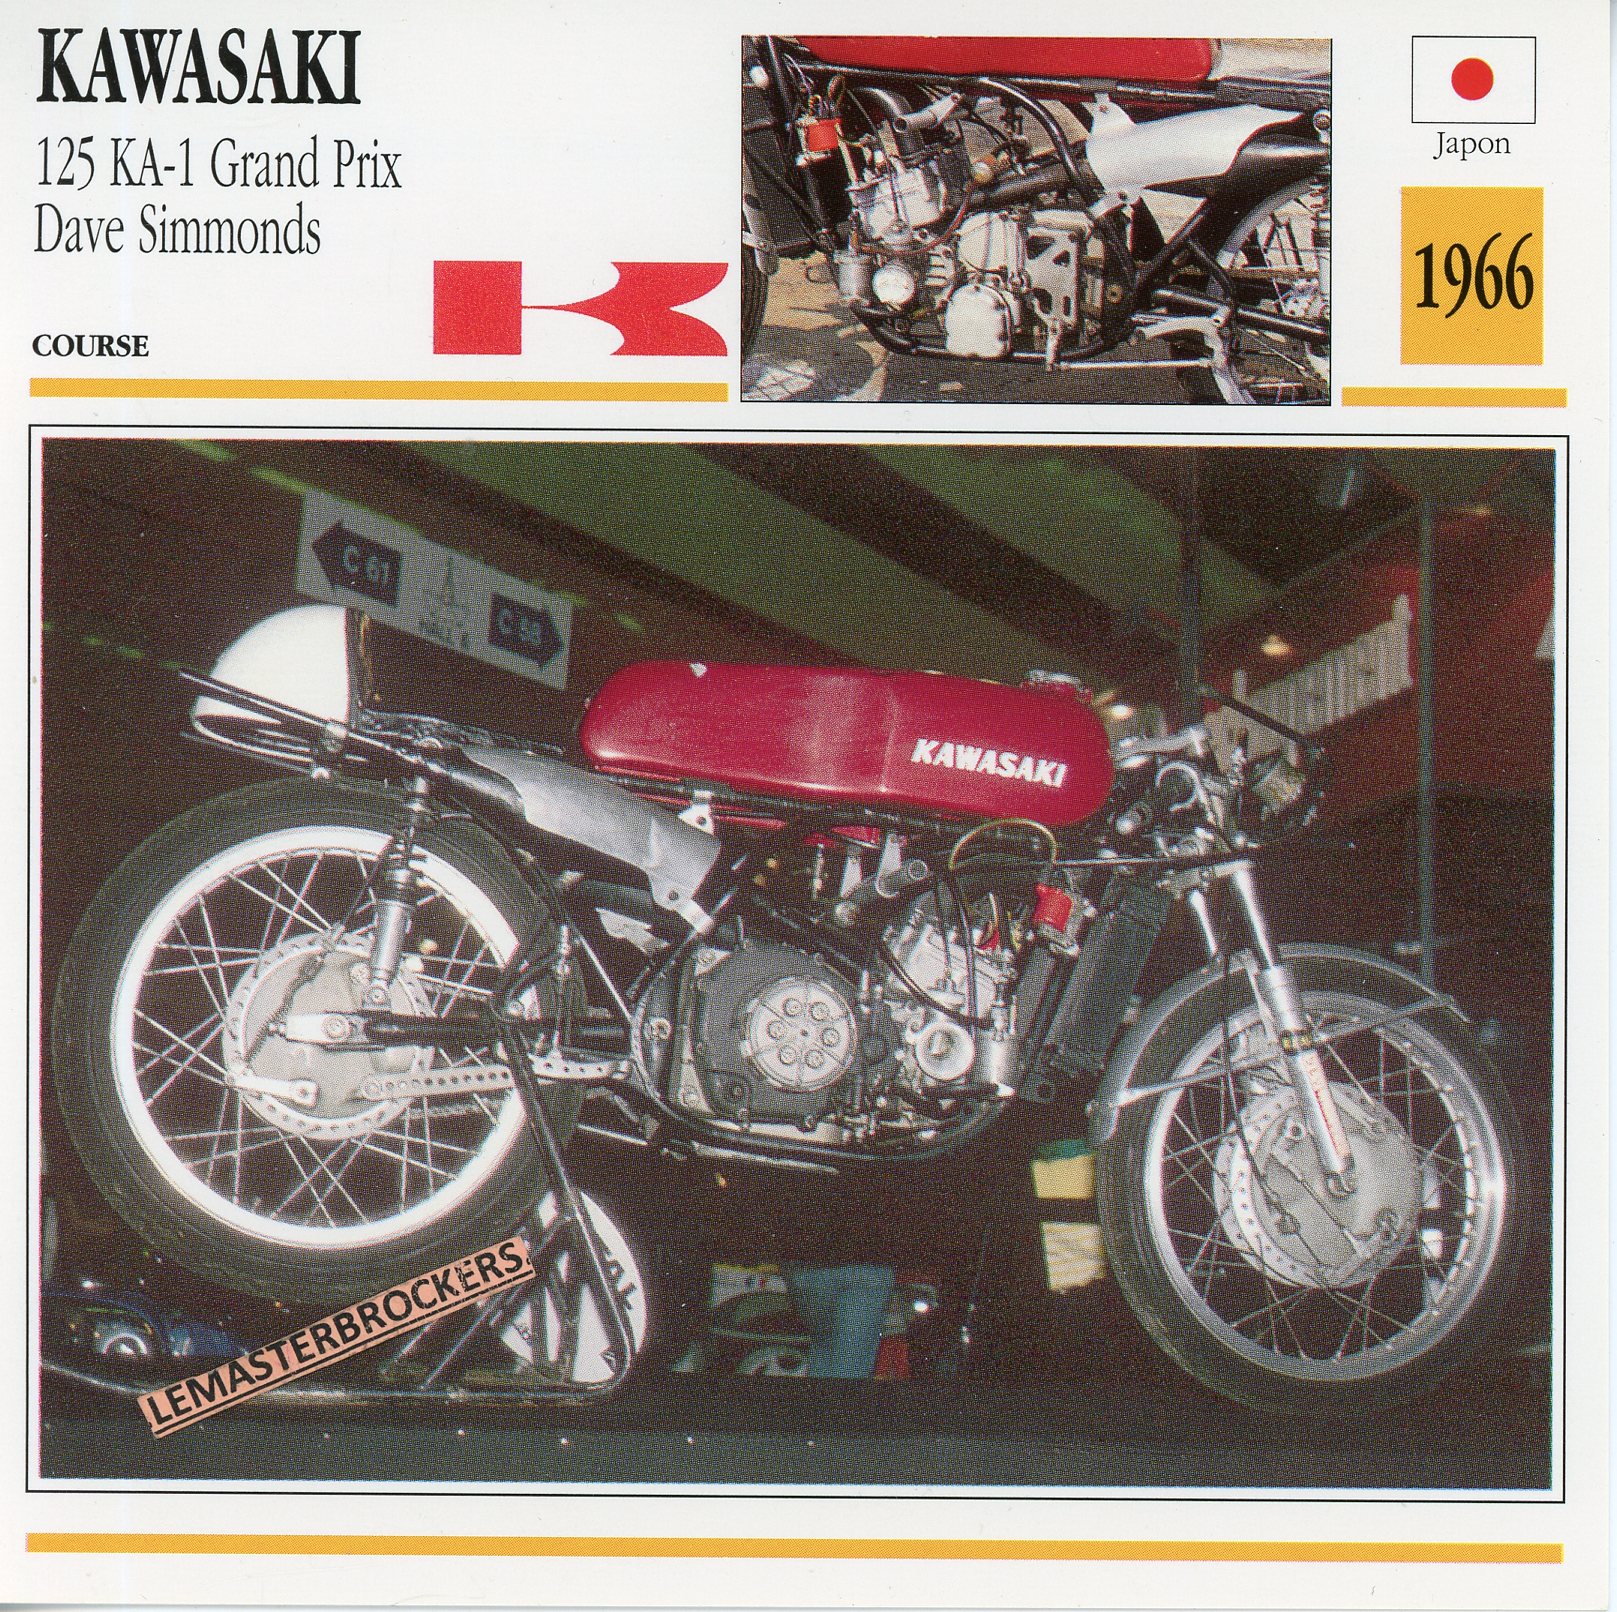 KAWASAKI-125 KA-1-FICHE-MOTO-LEMASTERBROCKERS